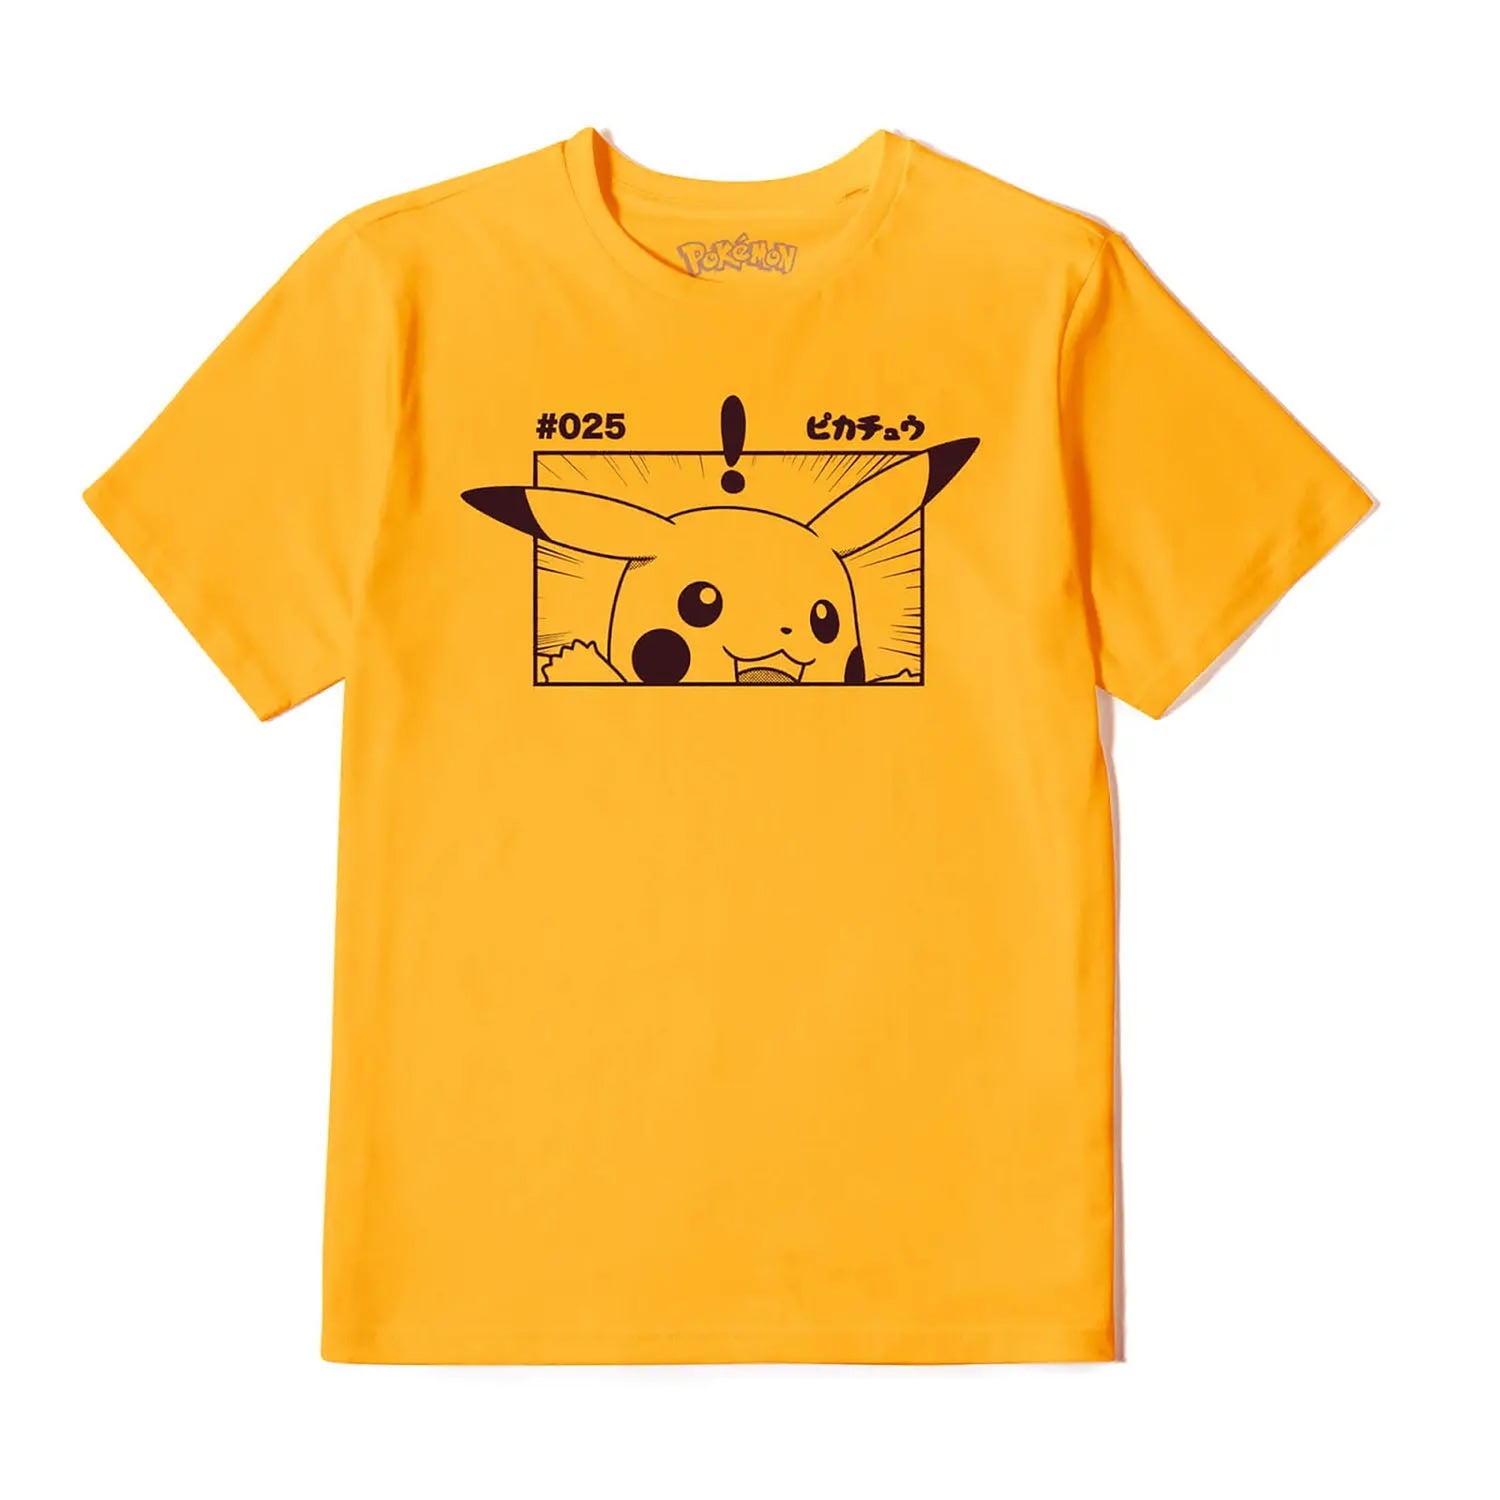 Pokémon Pikachu Unisex T-Shirt - Mosterd Geel